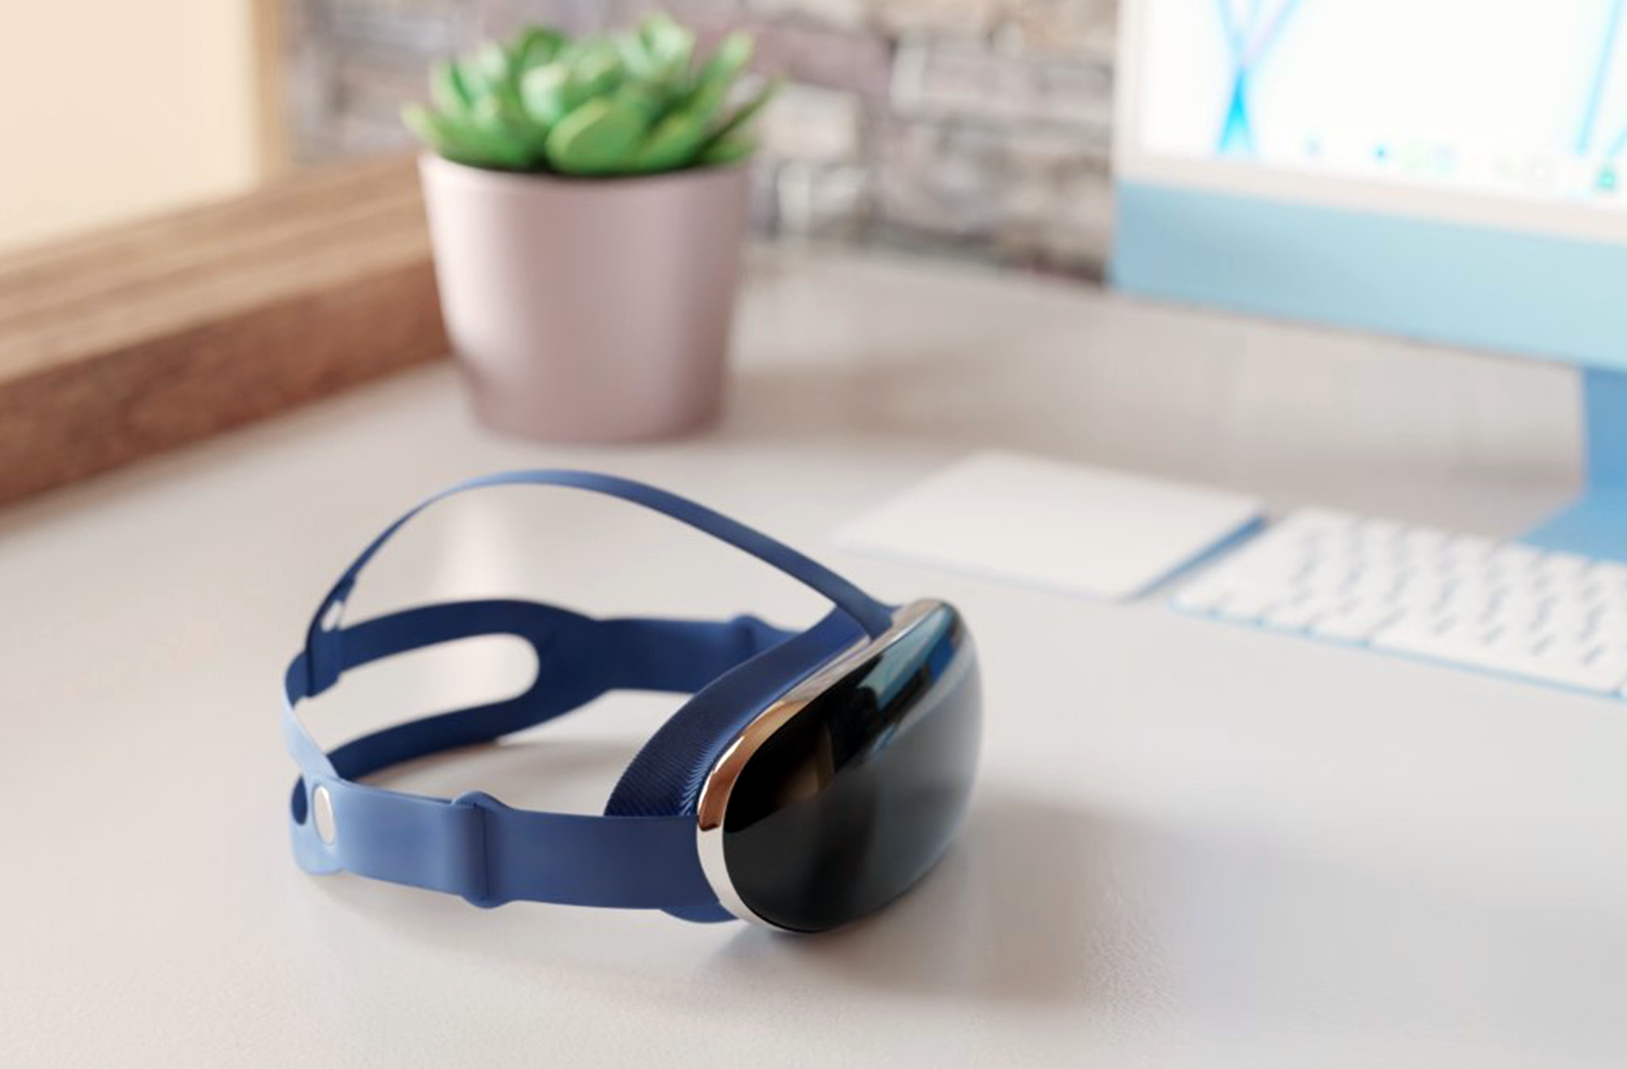 Про VR очки Apple. Что известно на данный момент